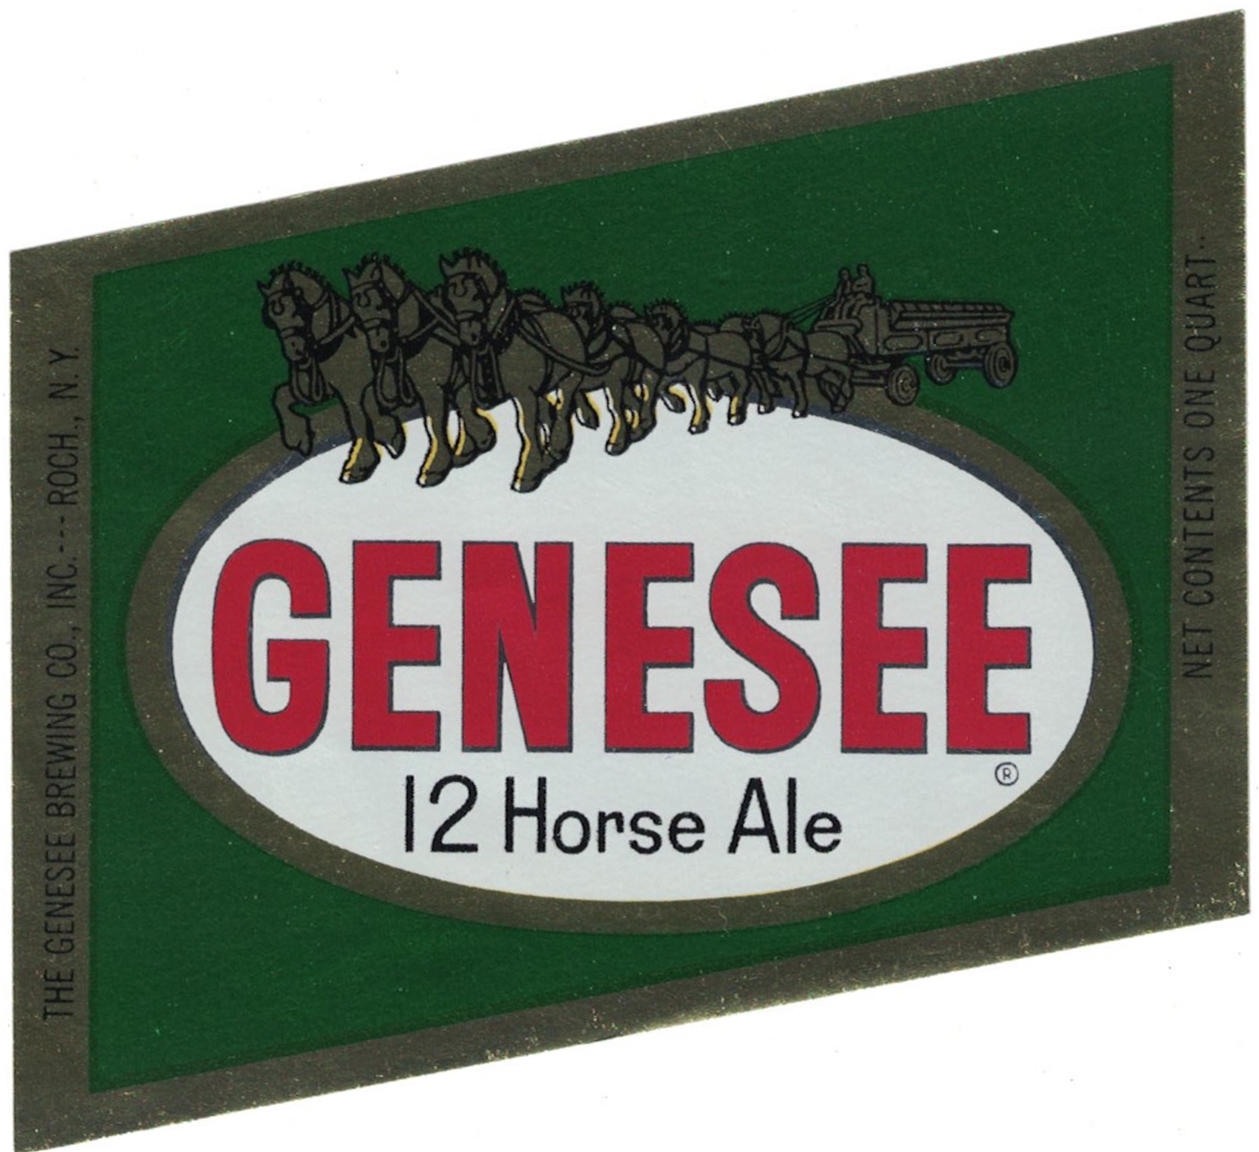 Genesee 12 Horse Ale Label (foil)